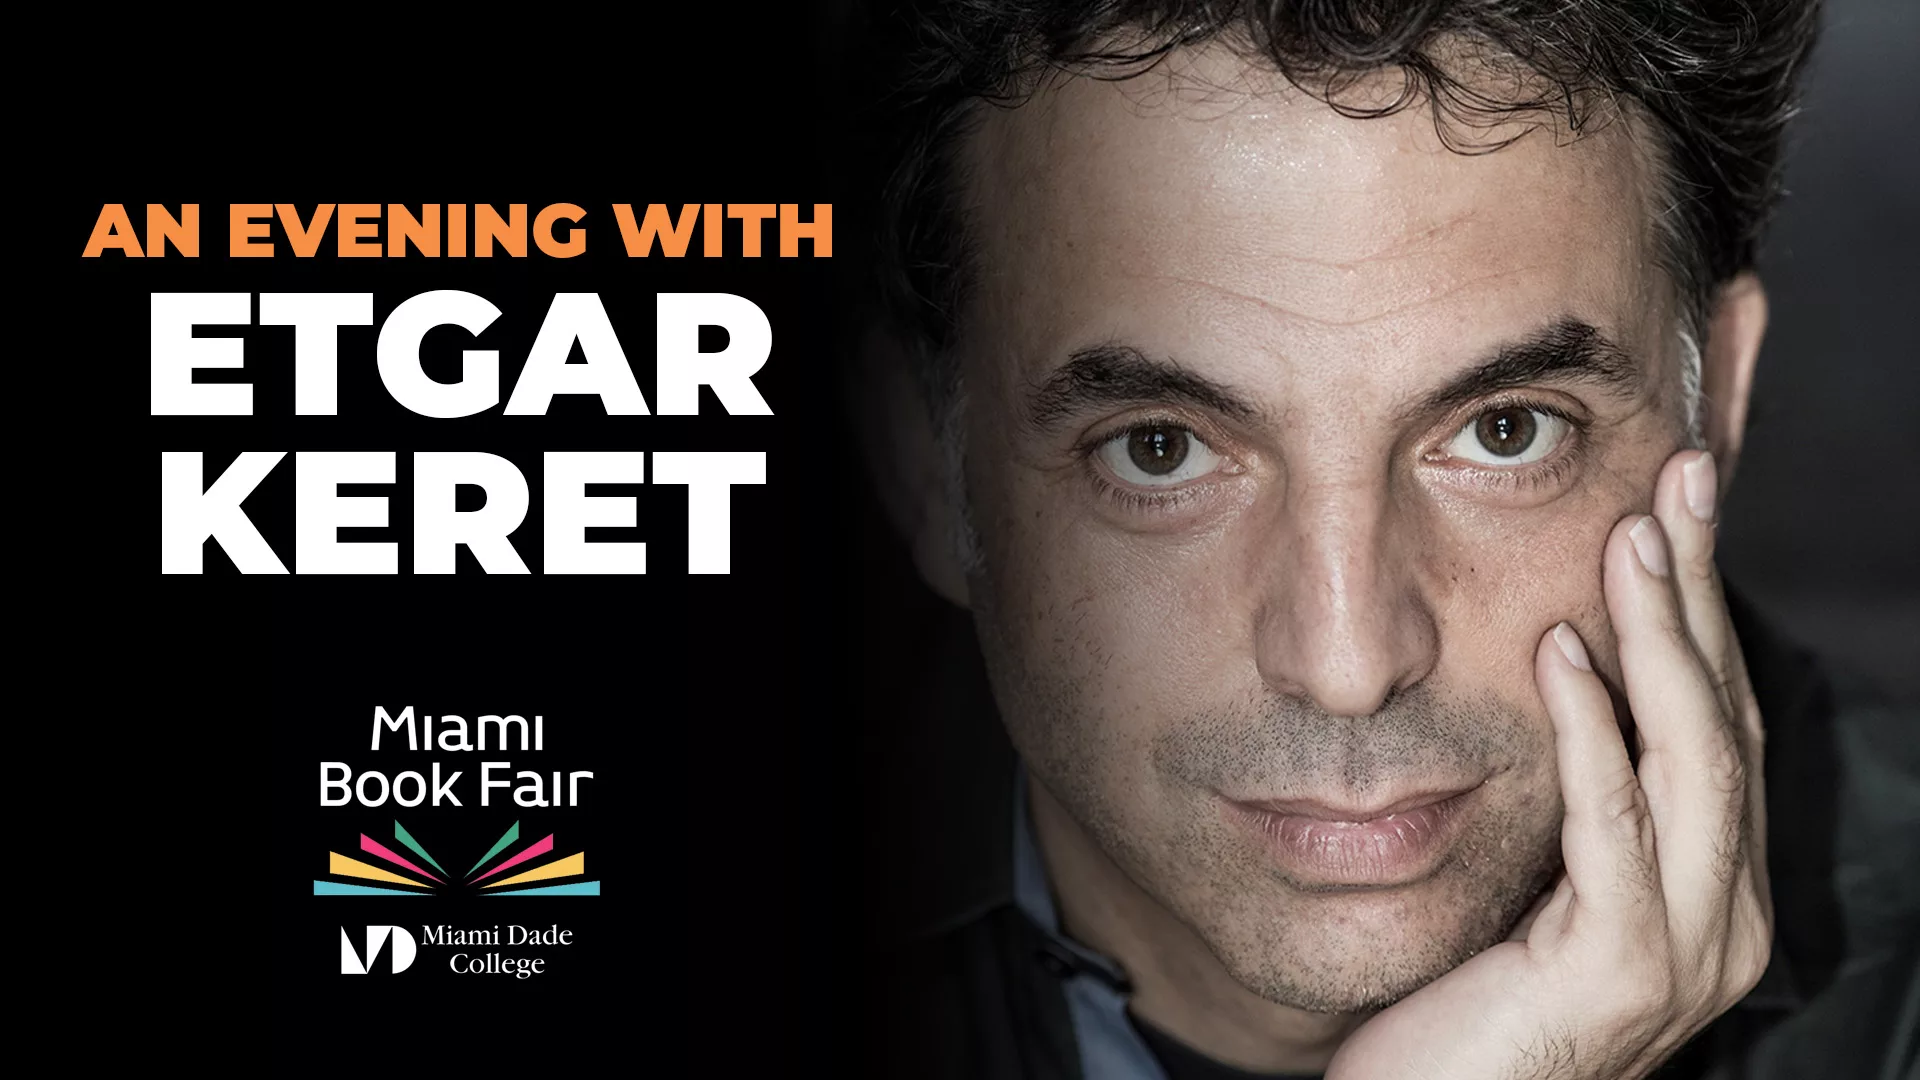 An evening with Etgar Keret Miami Book Fair